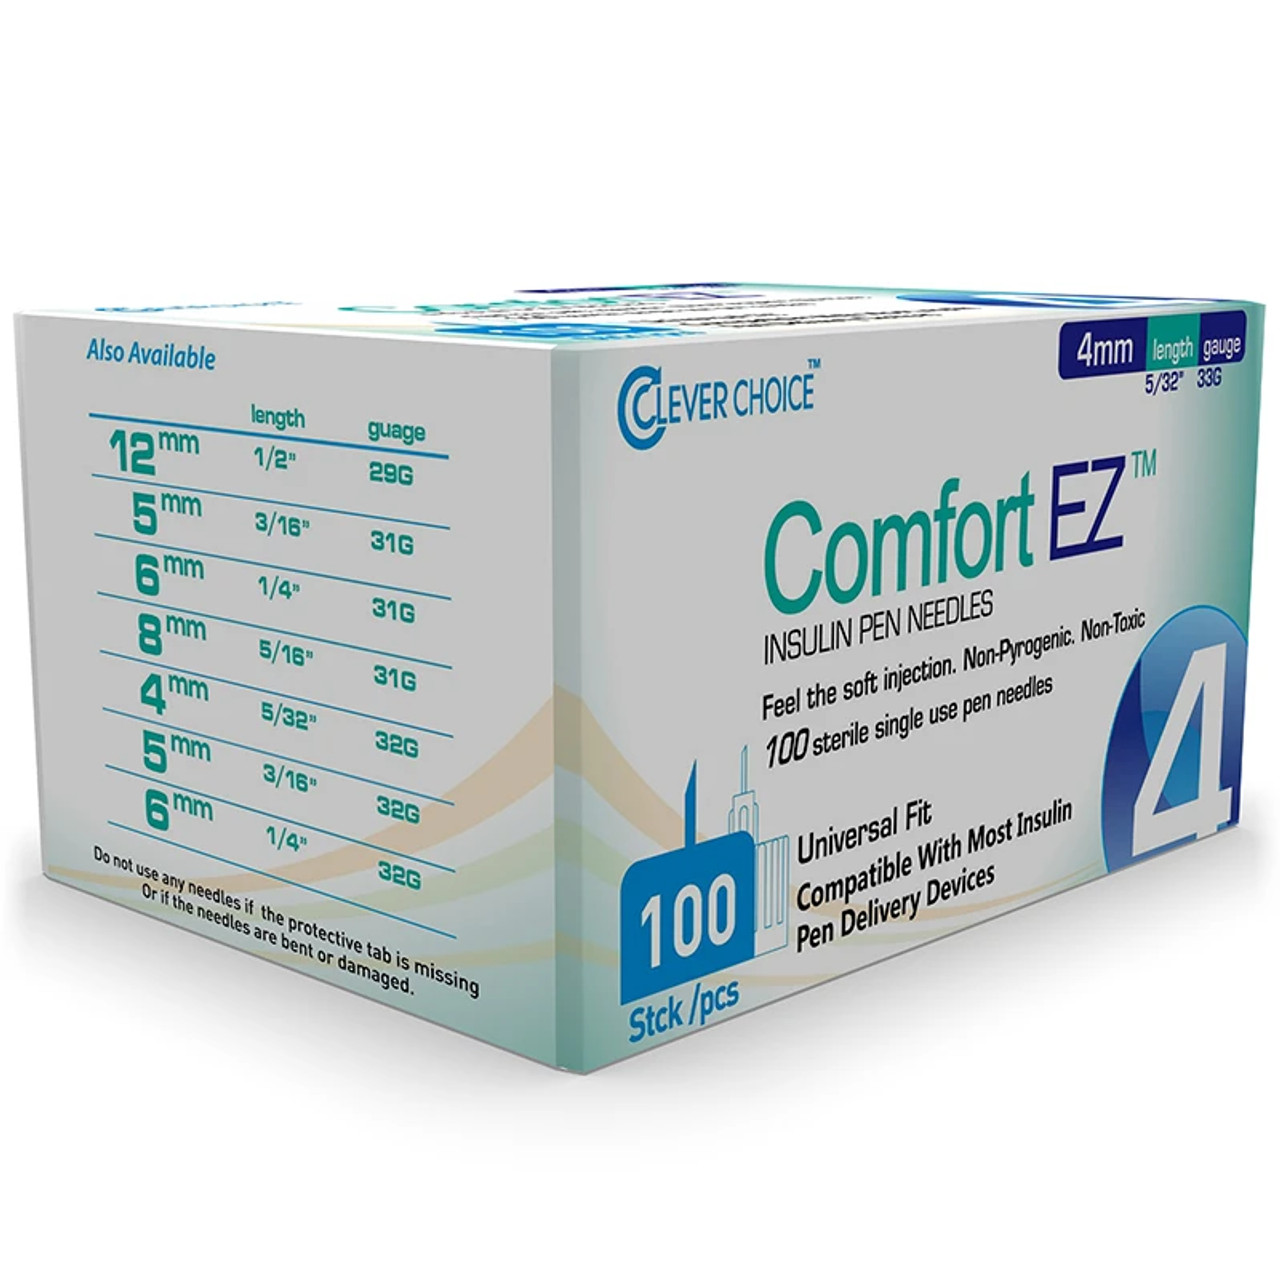 Clever Choice Comfort EZ Insulin Pen Needles 33G 5/32 (4mm) 100